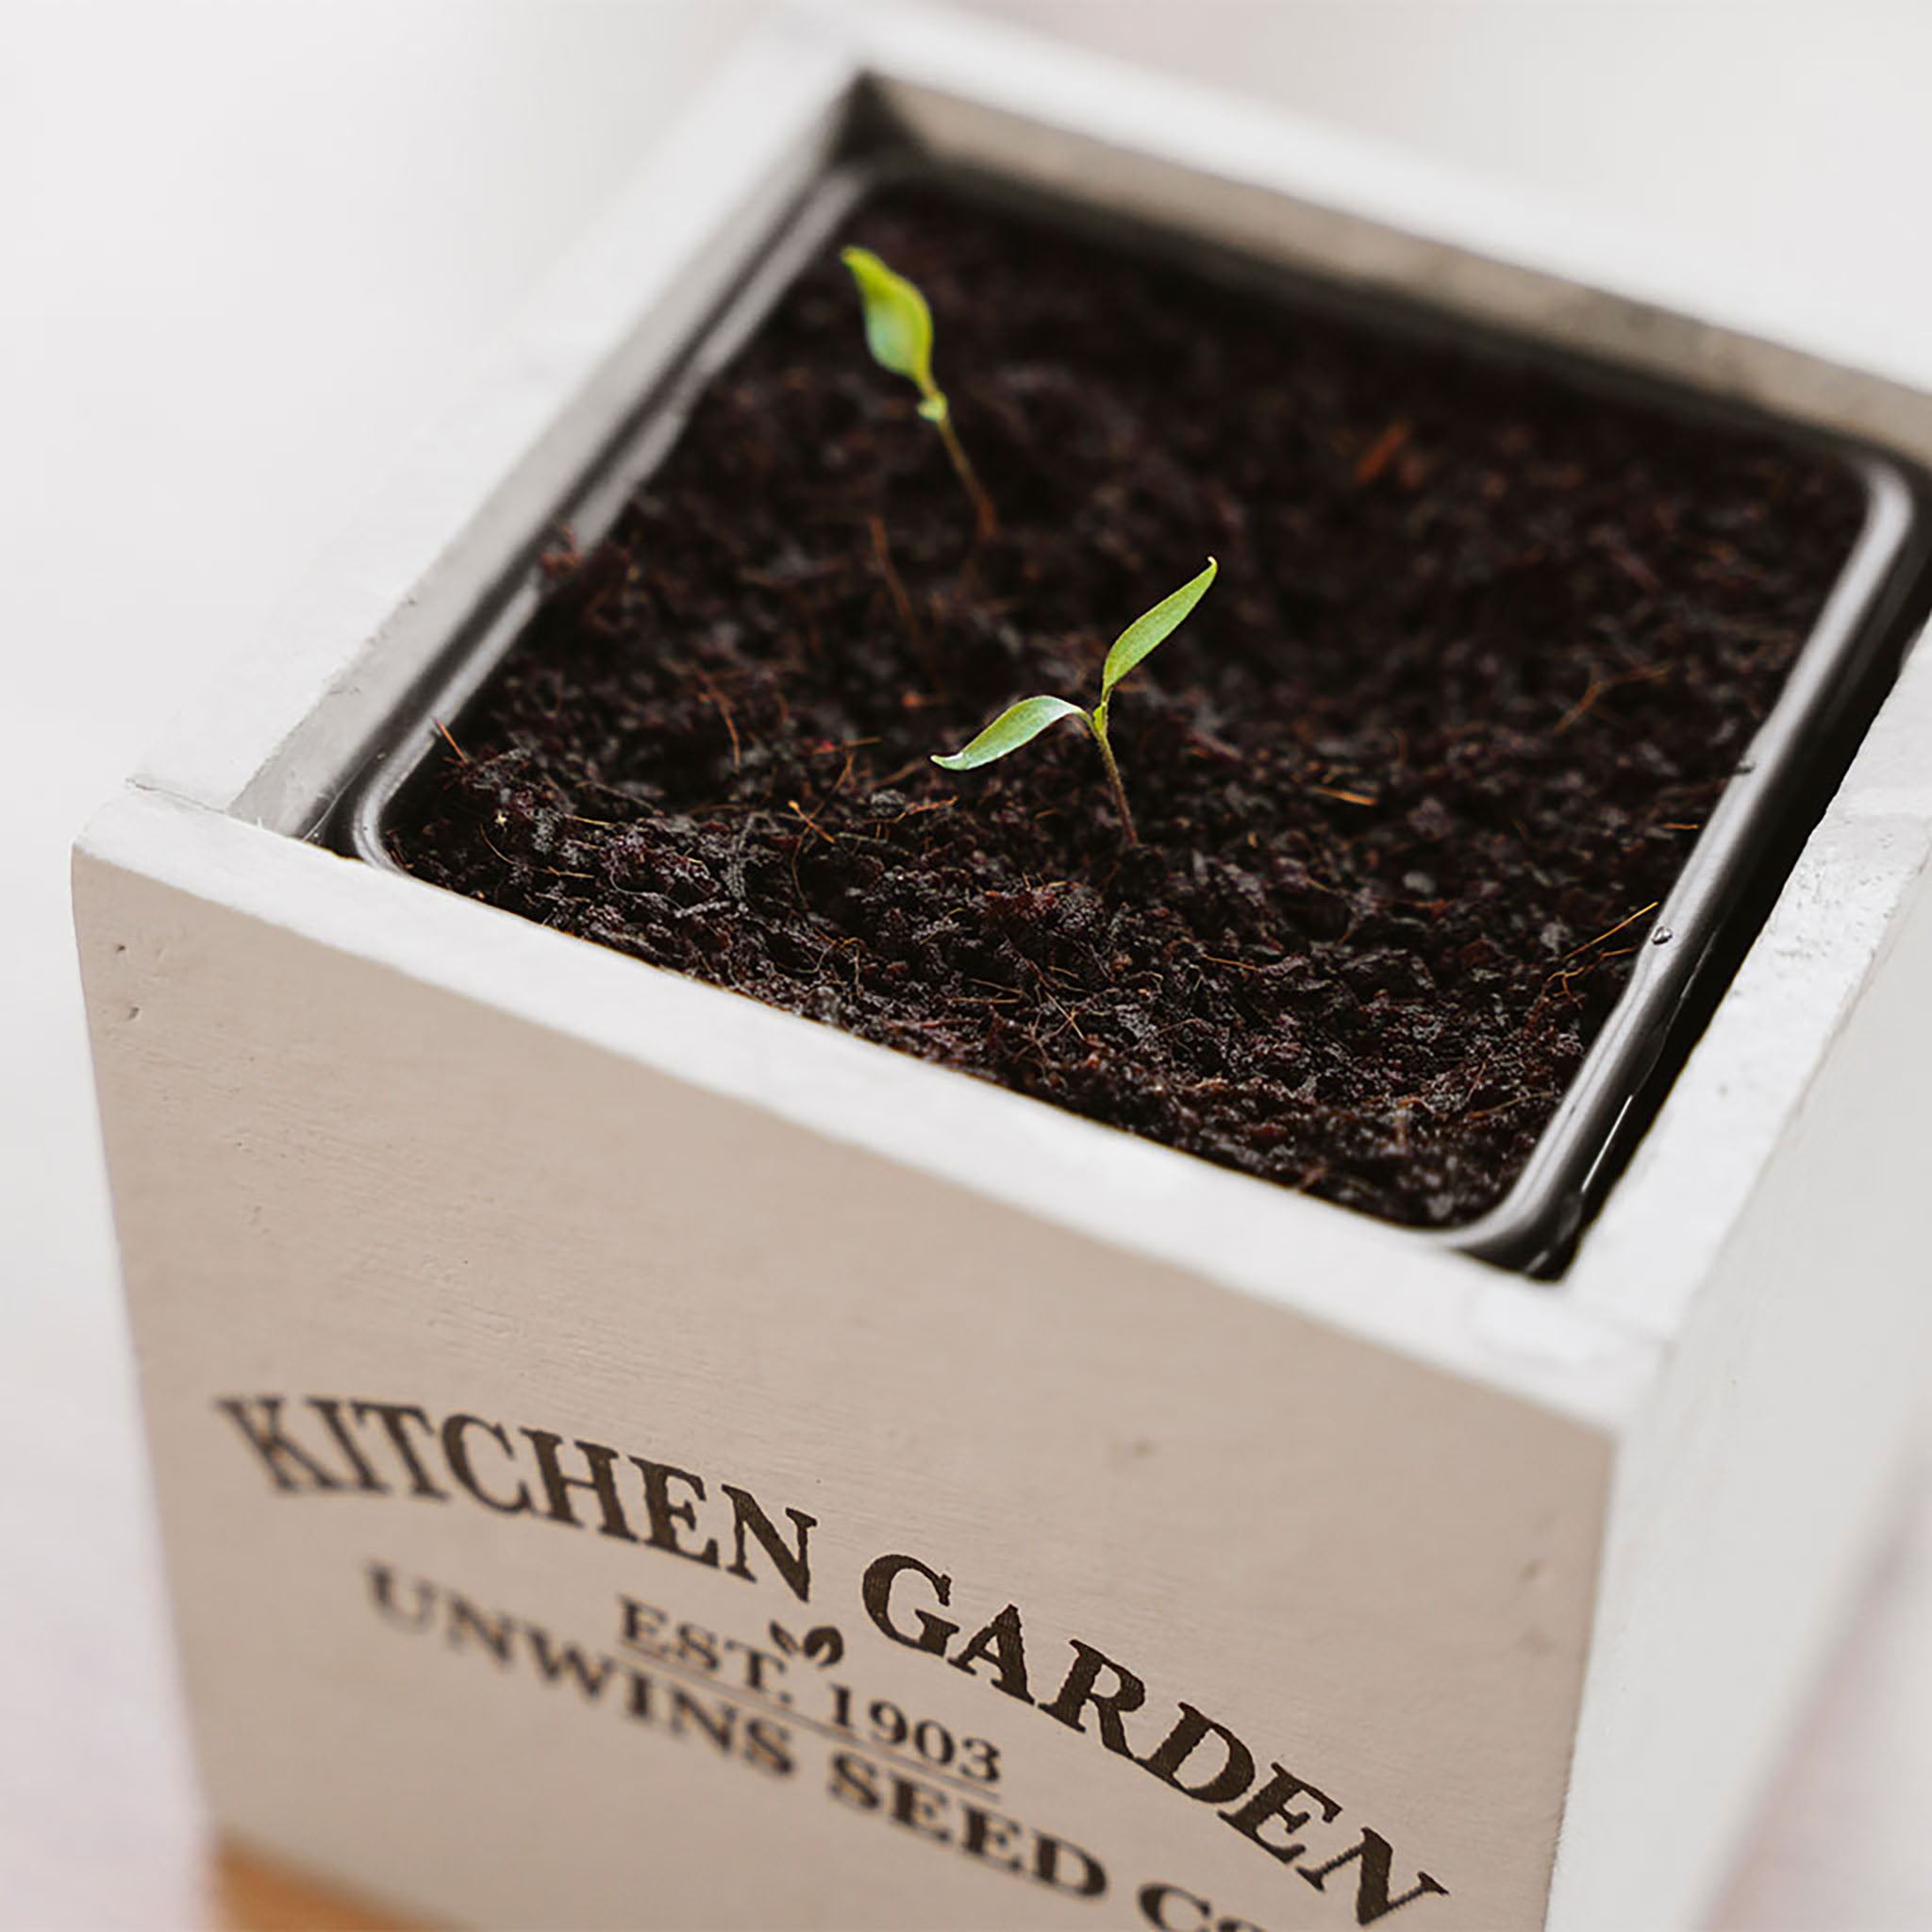 Buy Unwins Gardeners Seed Box Online